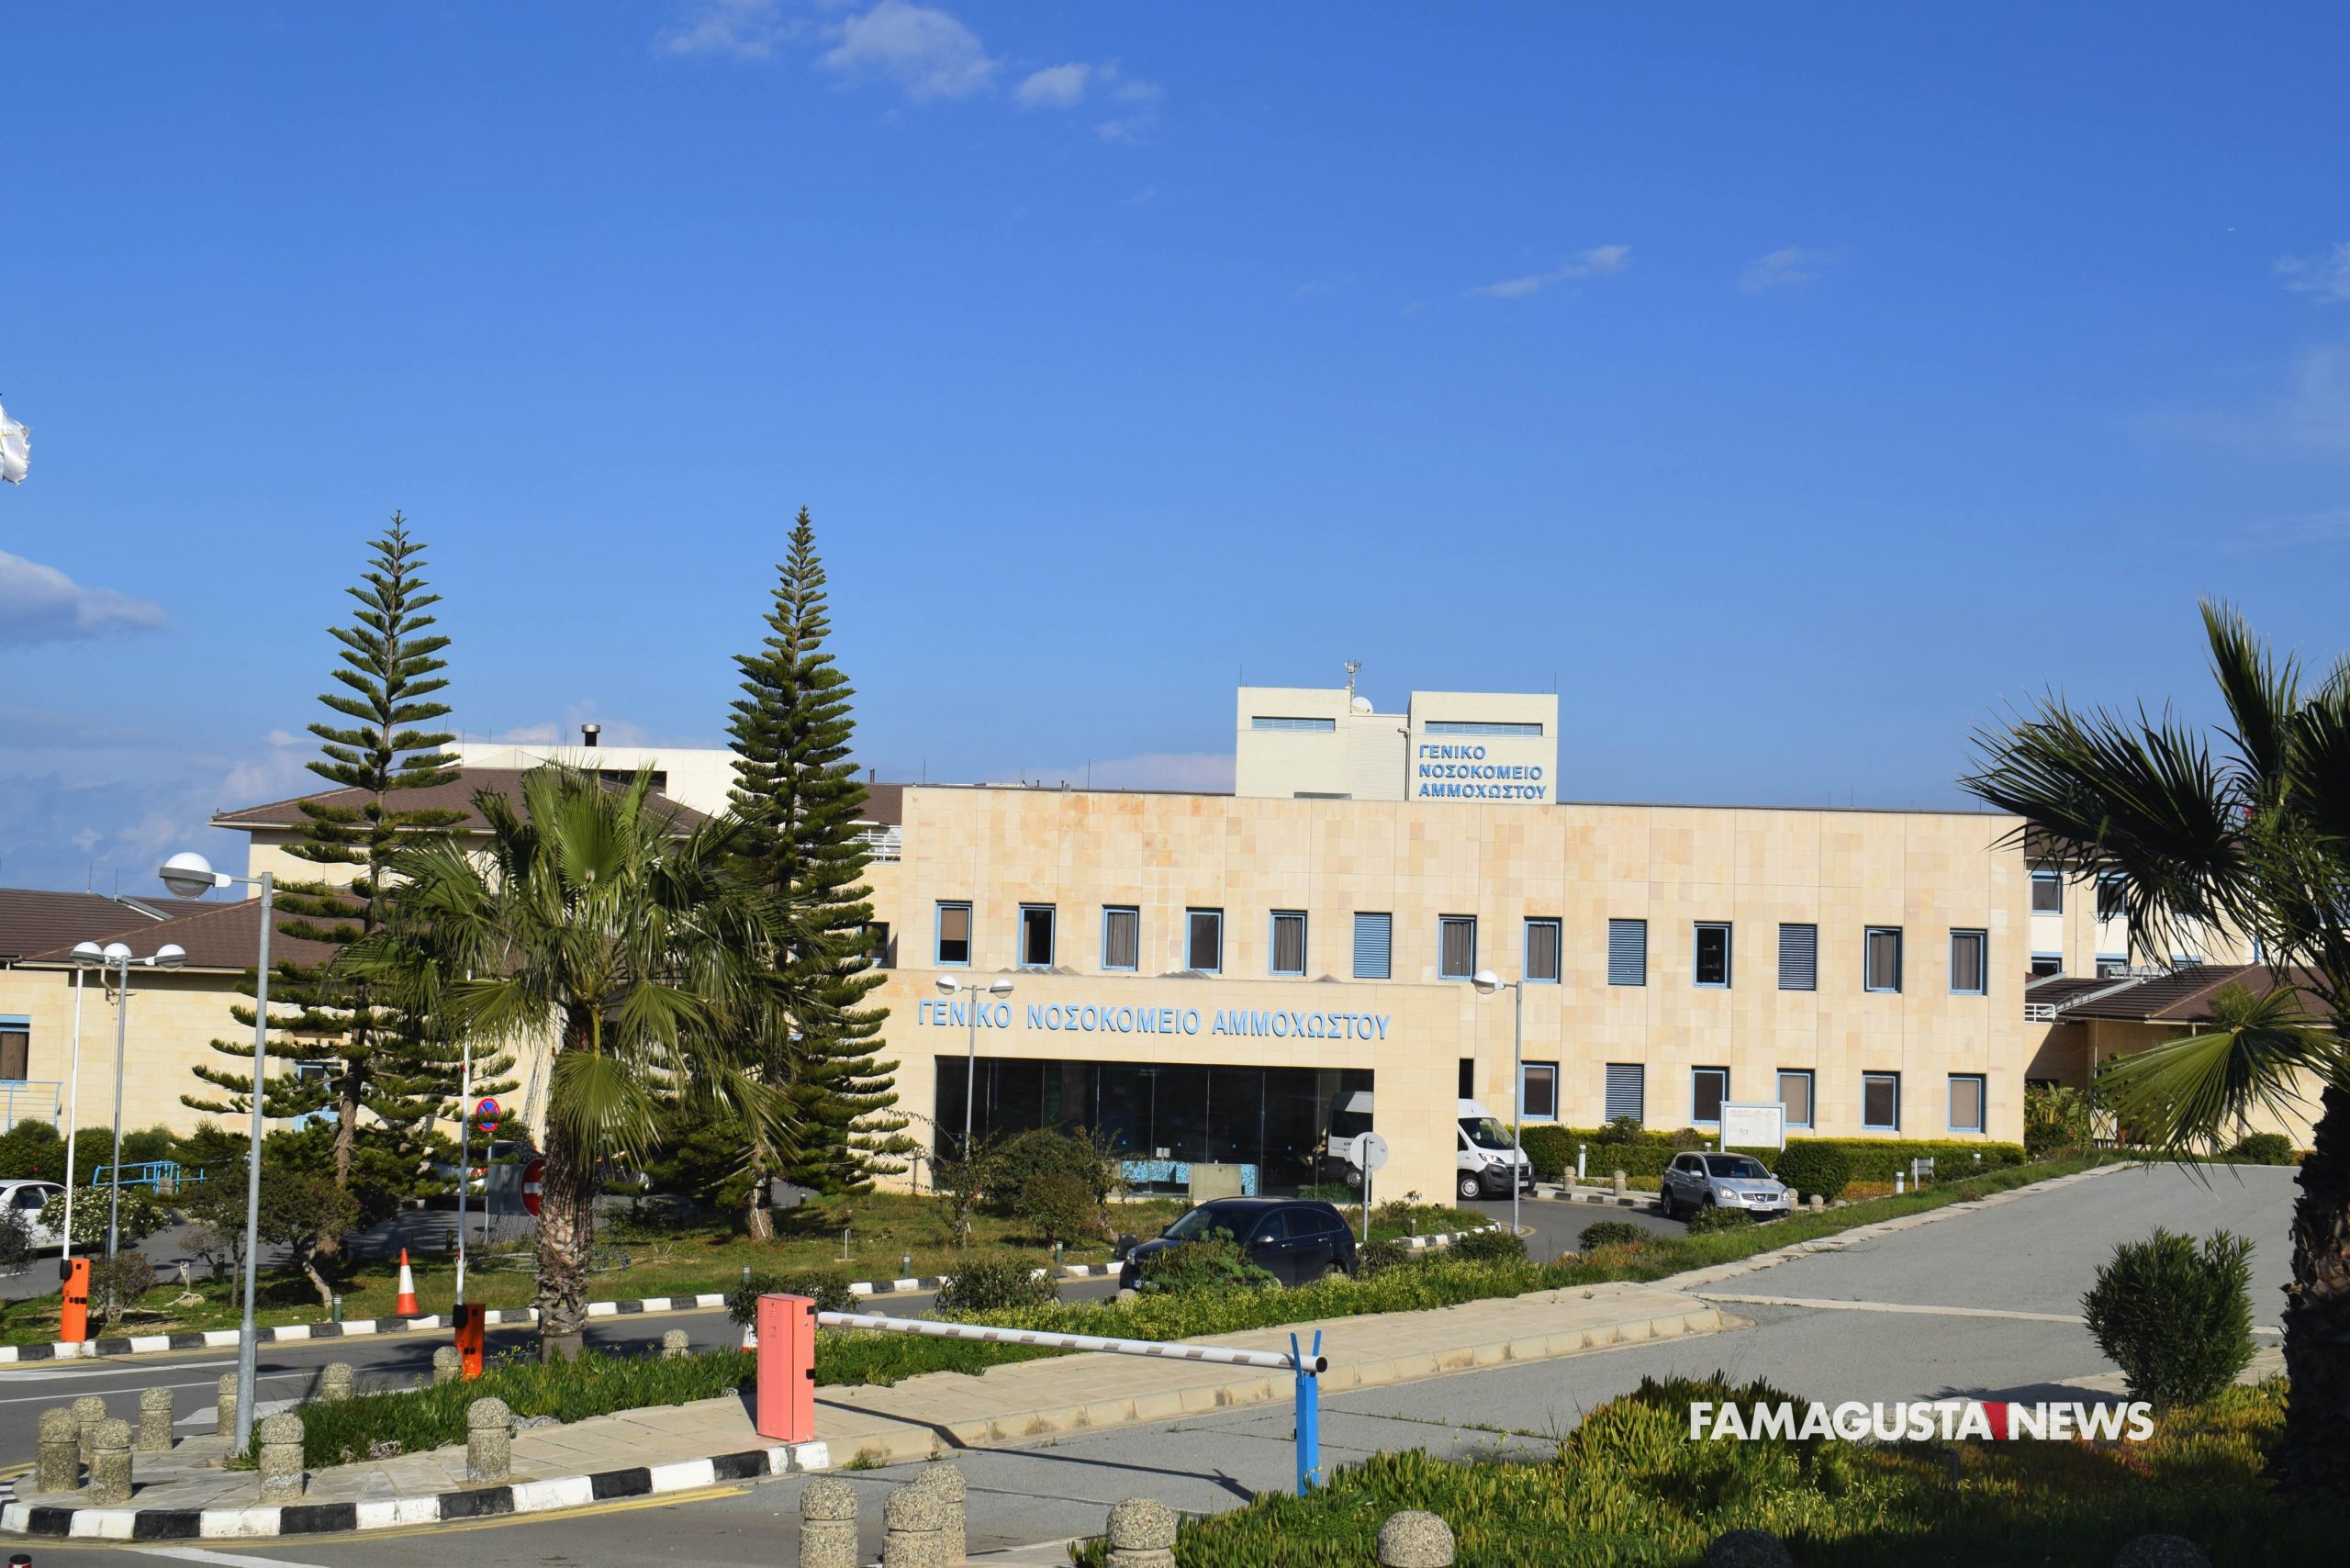 DSC 5705 3 scaled Famagusta General Hospital